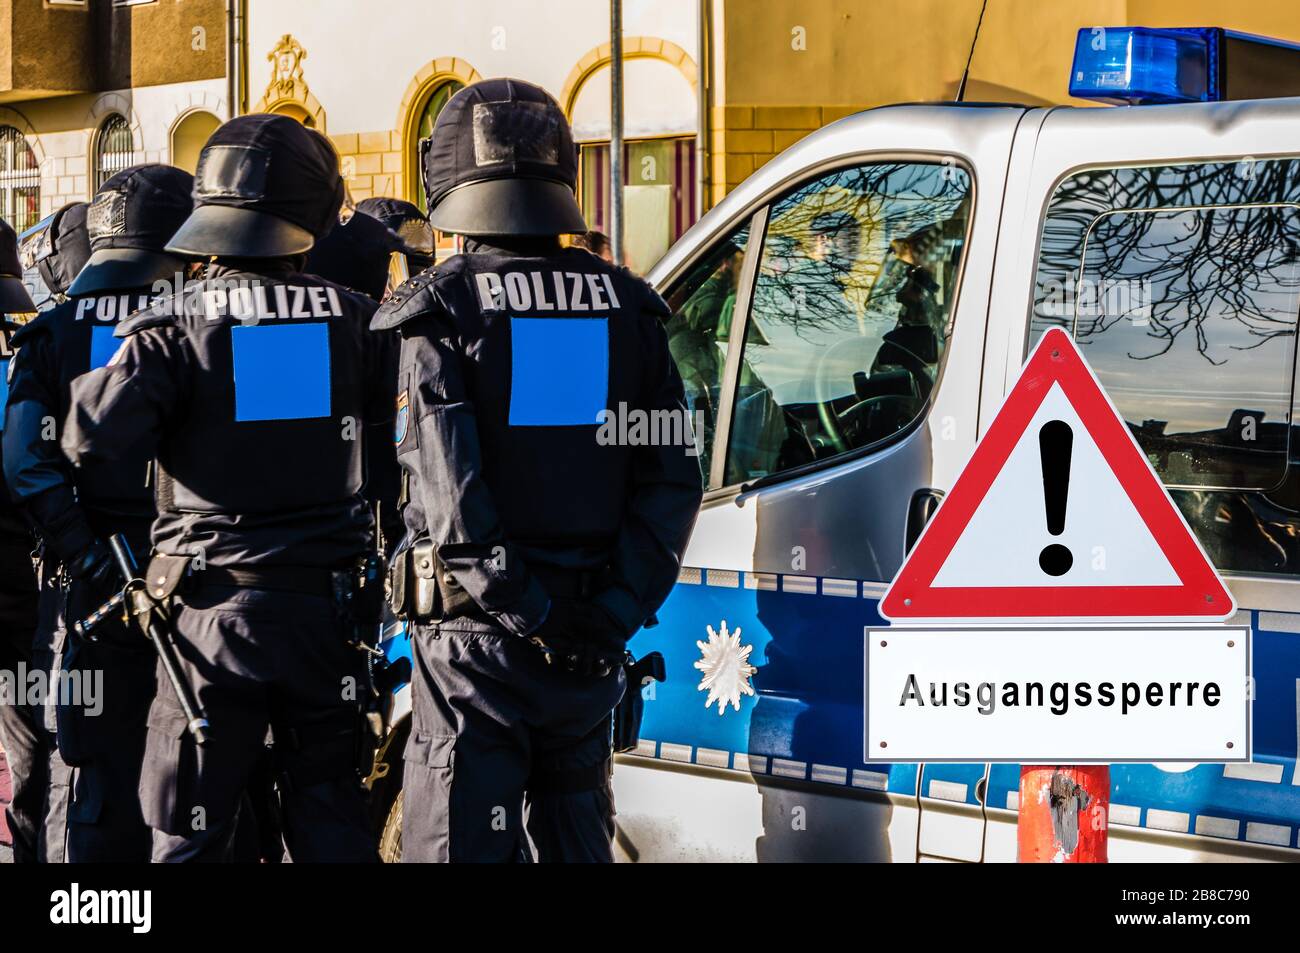 Police curfew warning sign in german Stock Photo